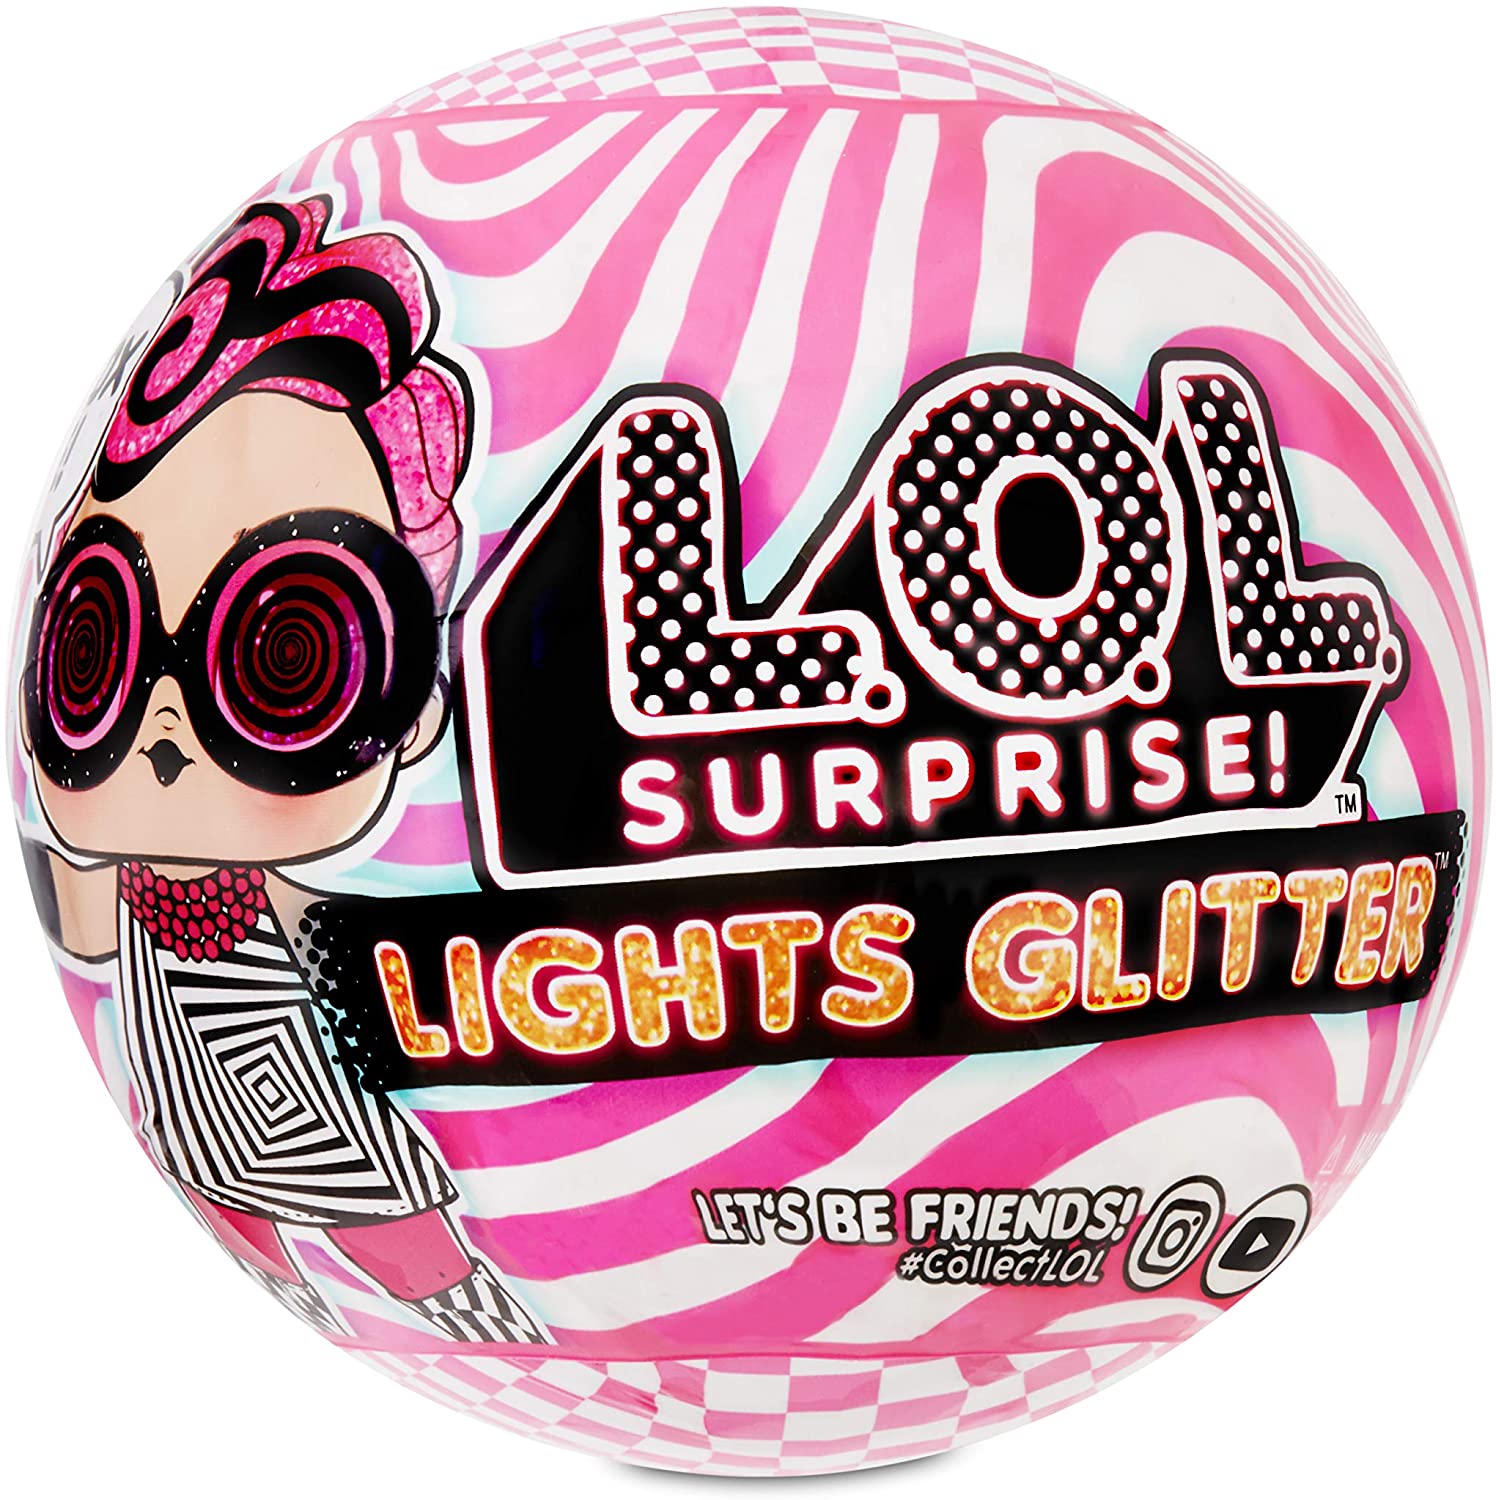 L.O.L. Surprise! Lights Glitter Doll with 8 Surprises Including Black Light Surprises